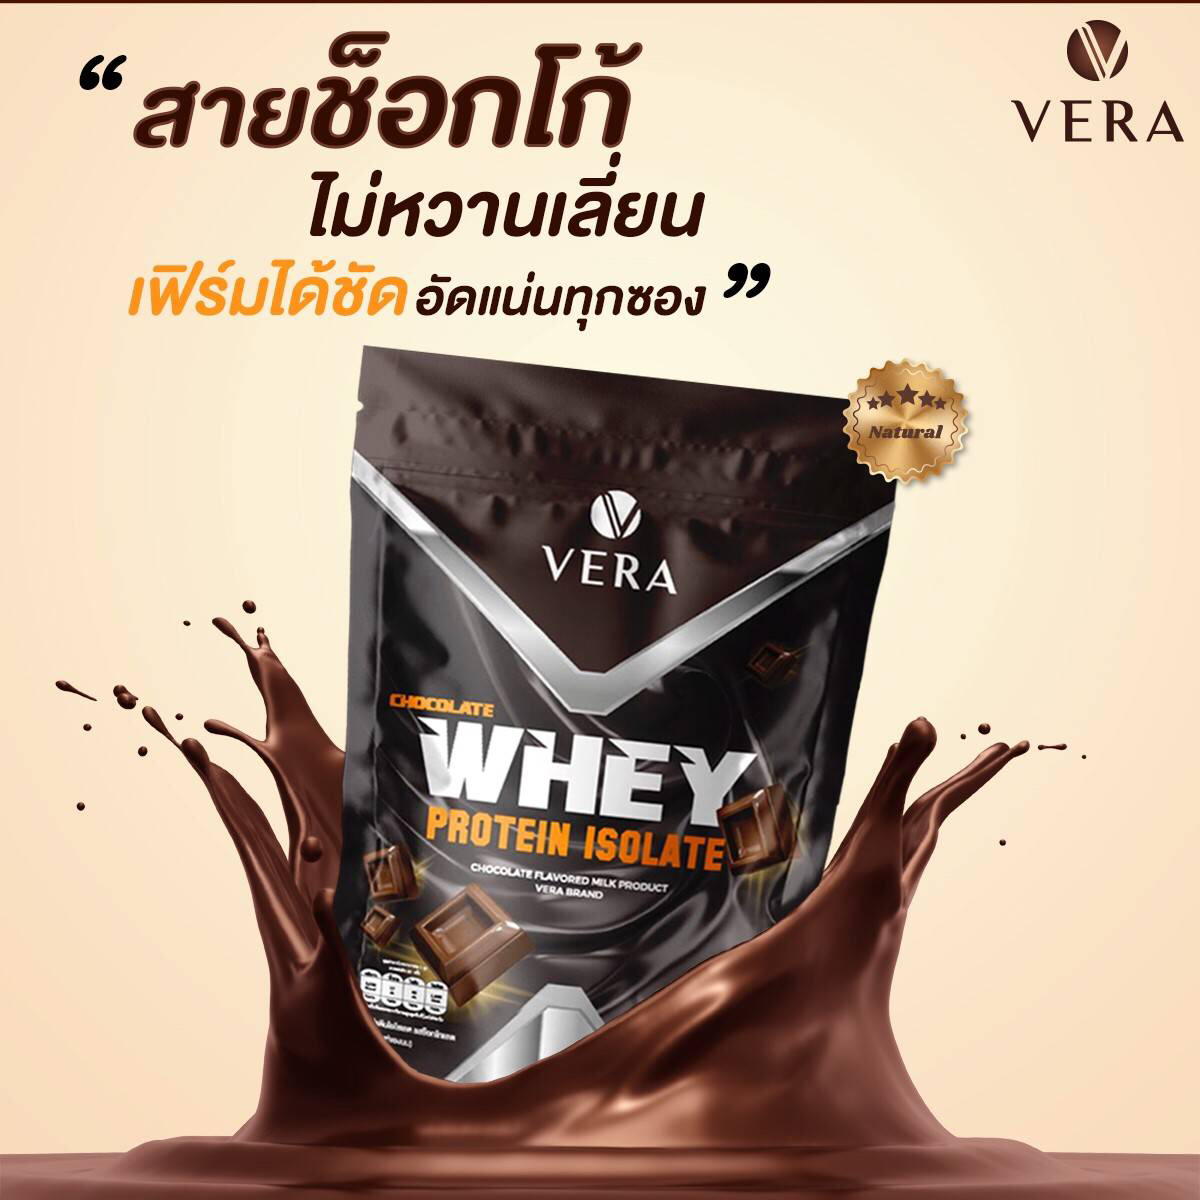 Vera Whey Isolate Choccolate เวร่า เวย์ รสช็อคโกแลต พร้อมส่ง!!